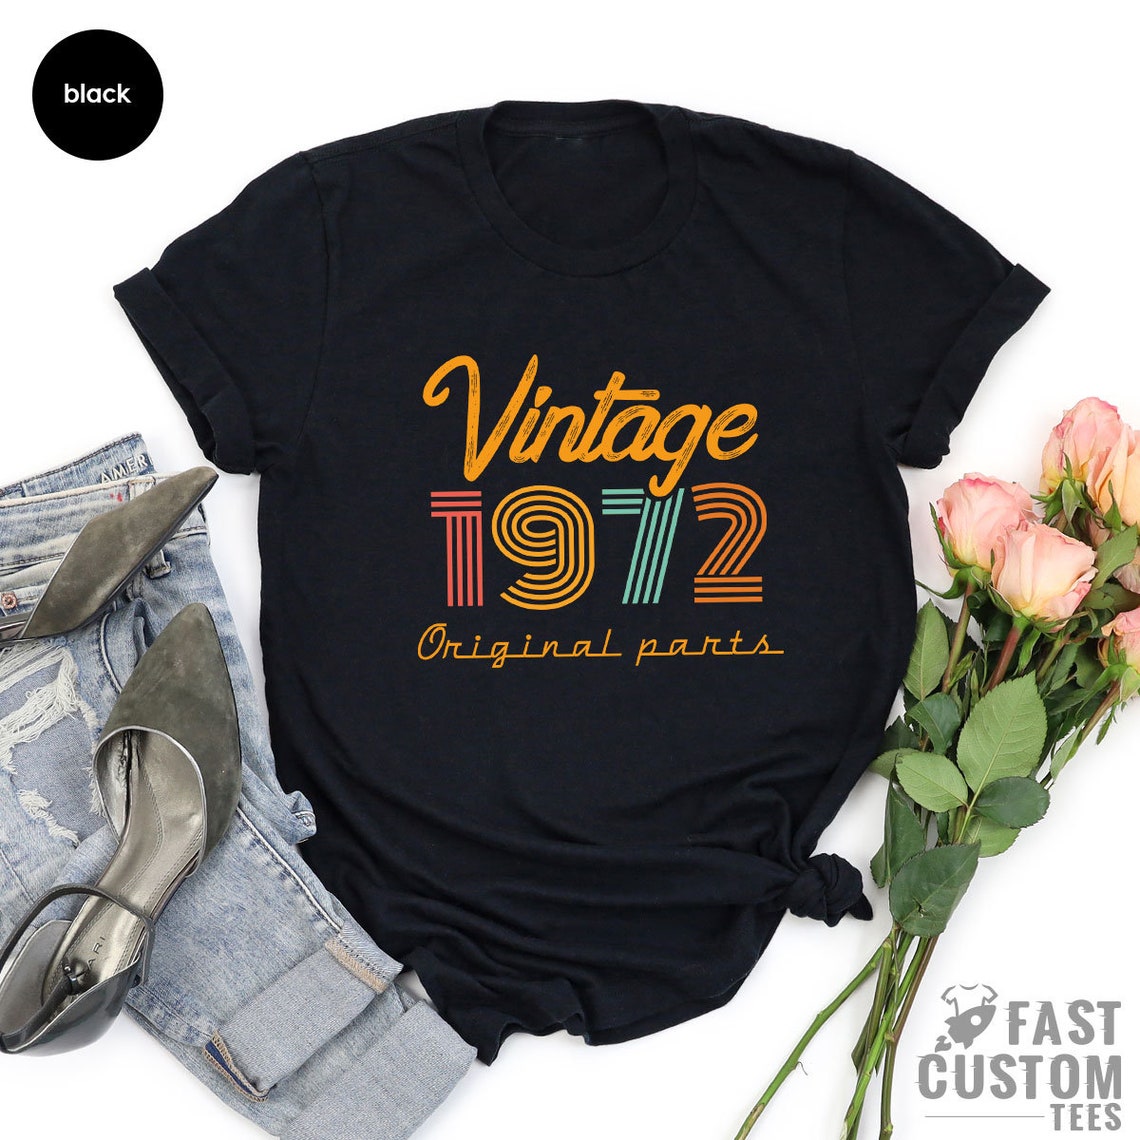 50th Birthday Shirt, Vintage T Shirt, Vintage 1972 Shirt